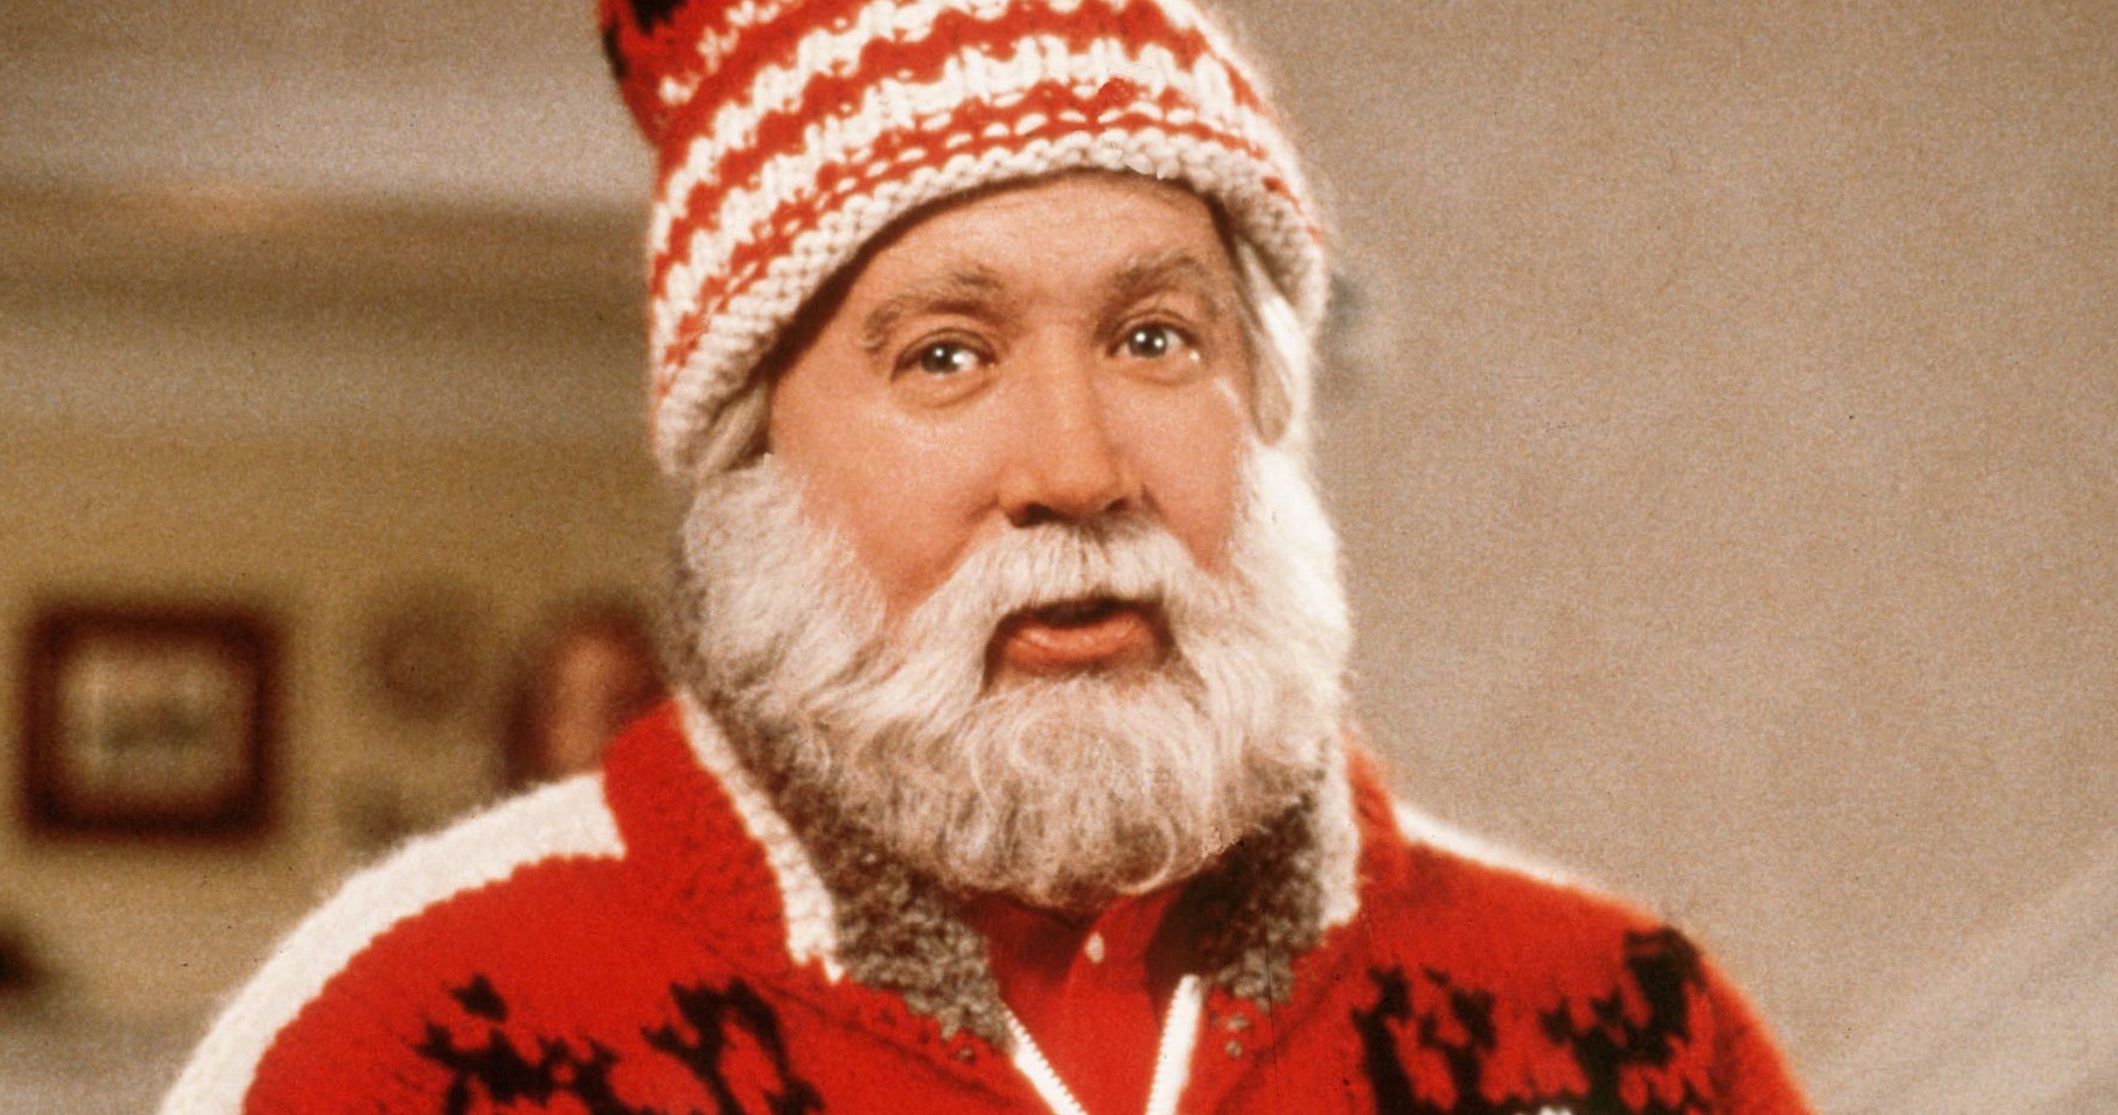 Tim Allen's Beard Trends After Santa Clause Star Wins Best Movie Santa Poll